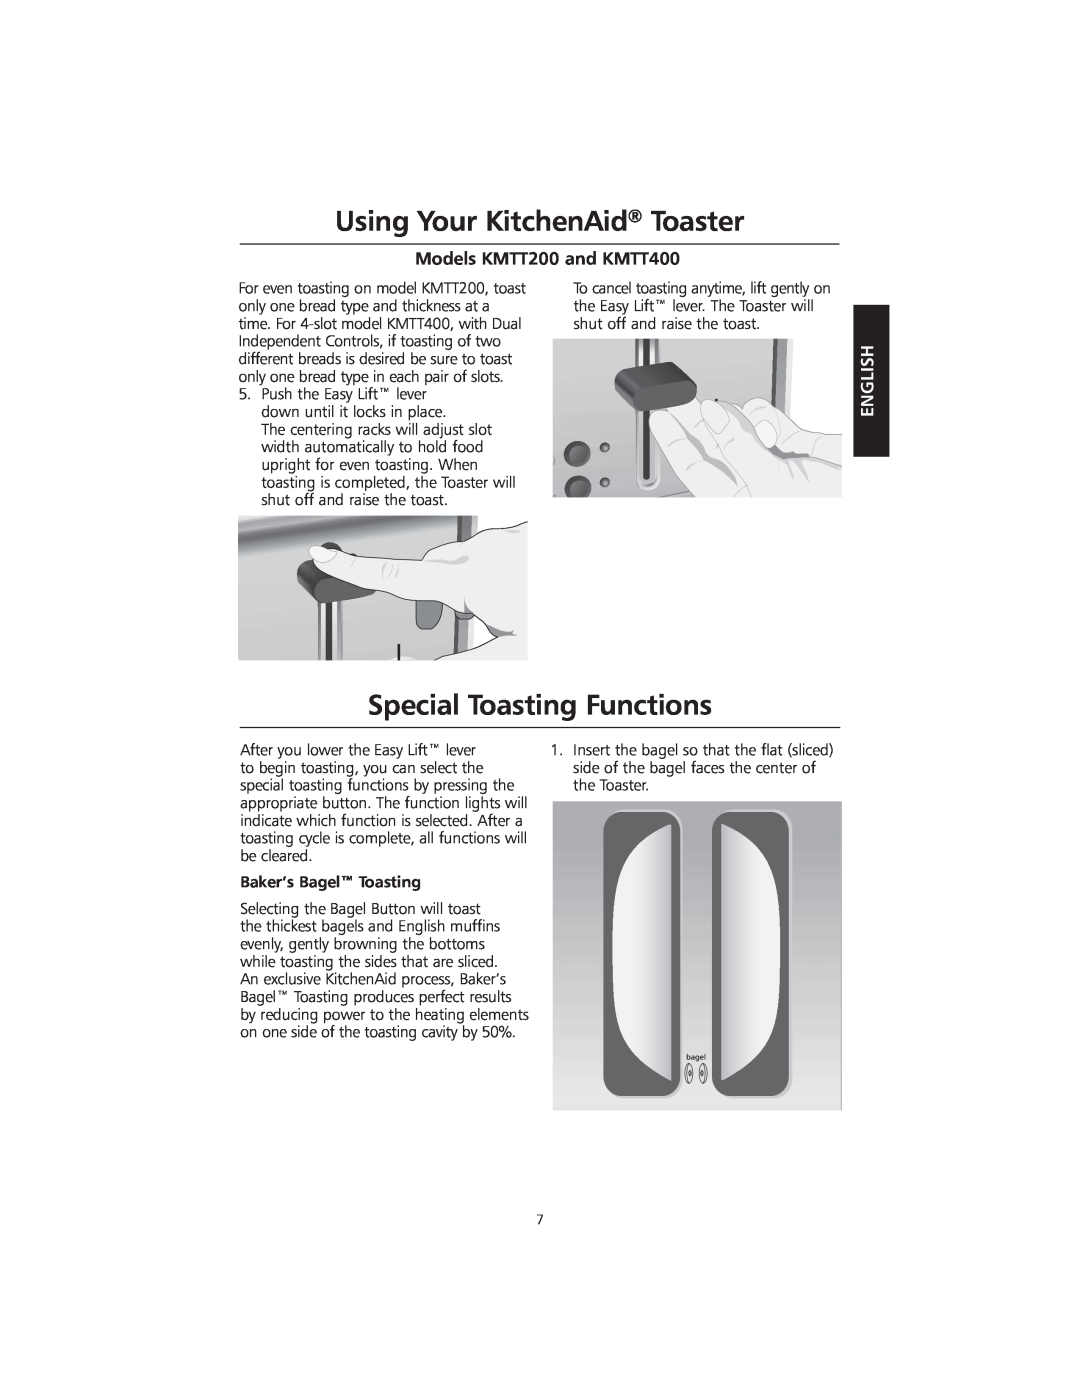 KitchenAid manual Special Toasting Functions, Using Your KitchenAid Toaster, Models KMTT200 and KMTT400, English 